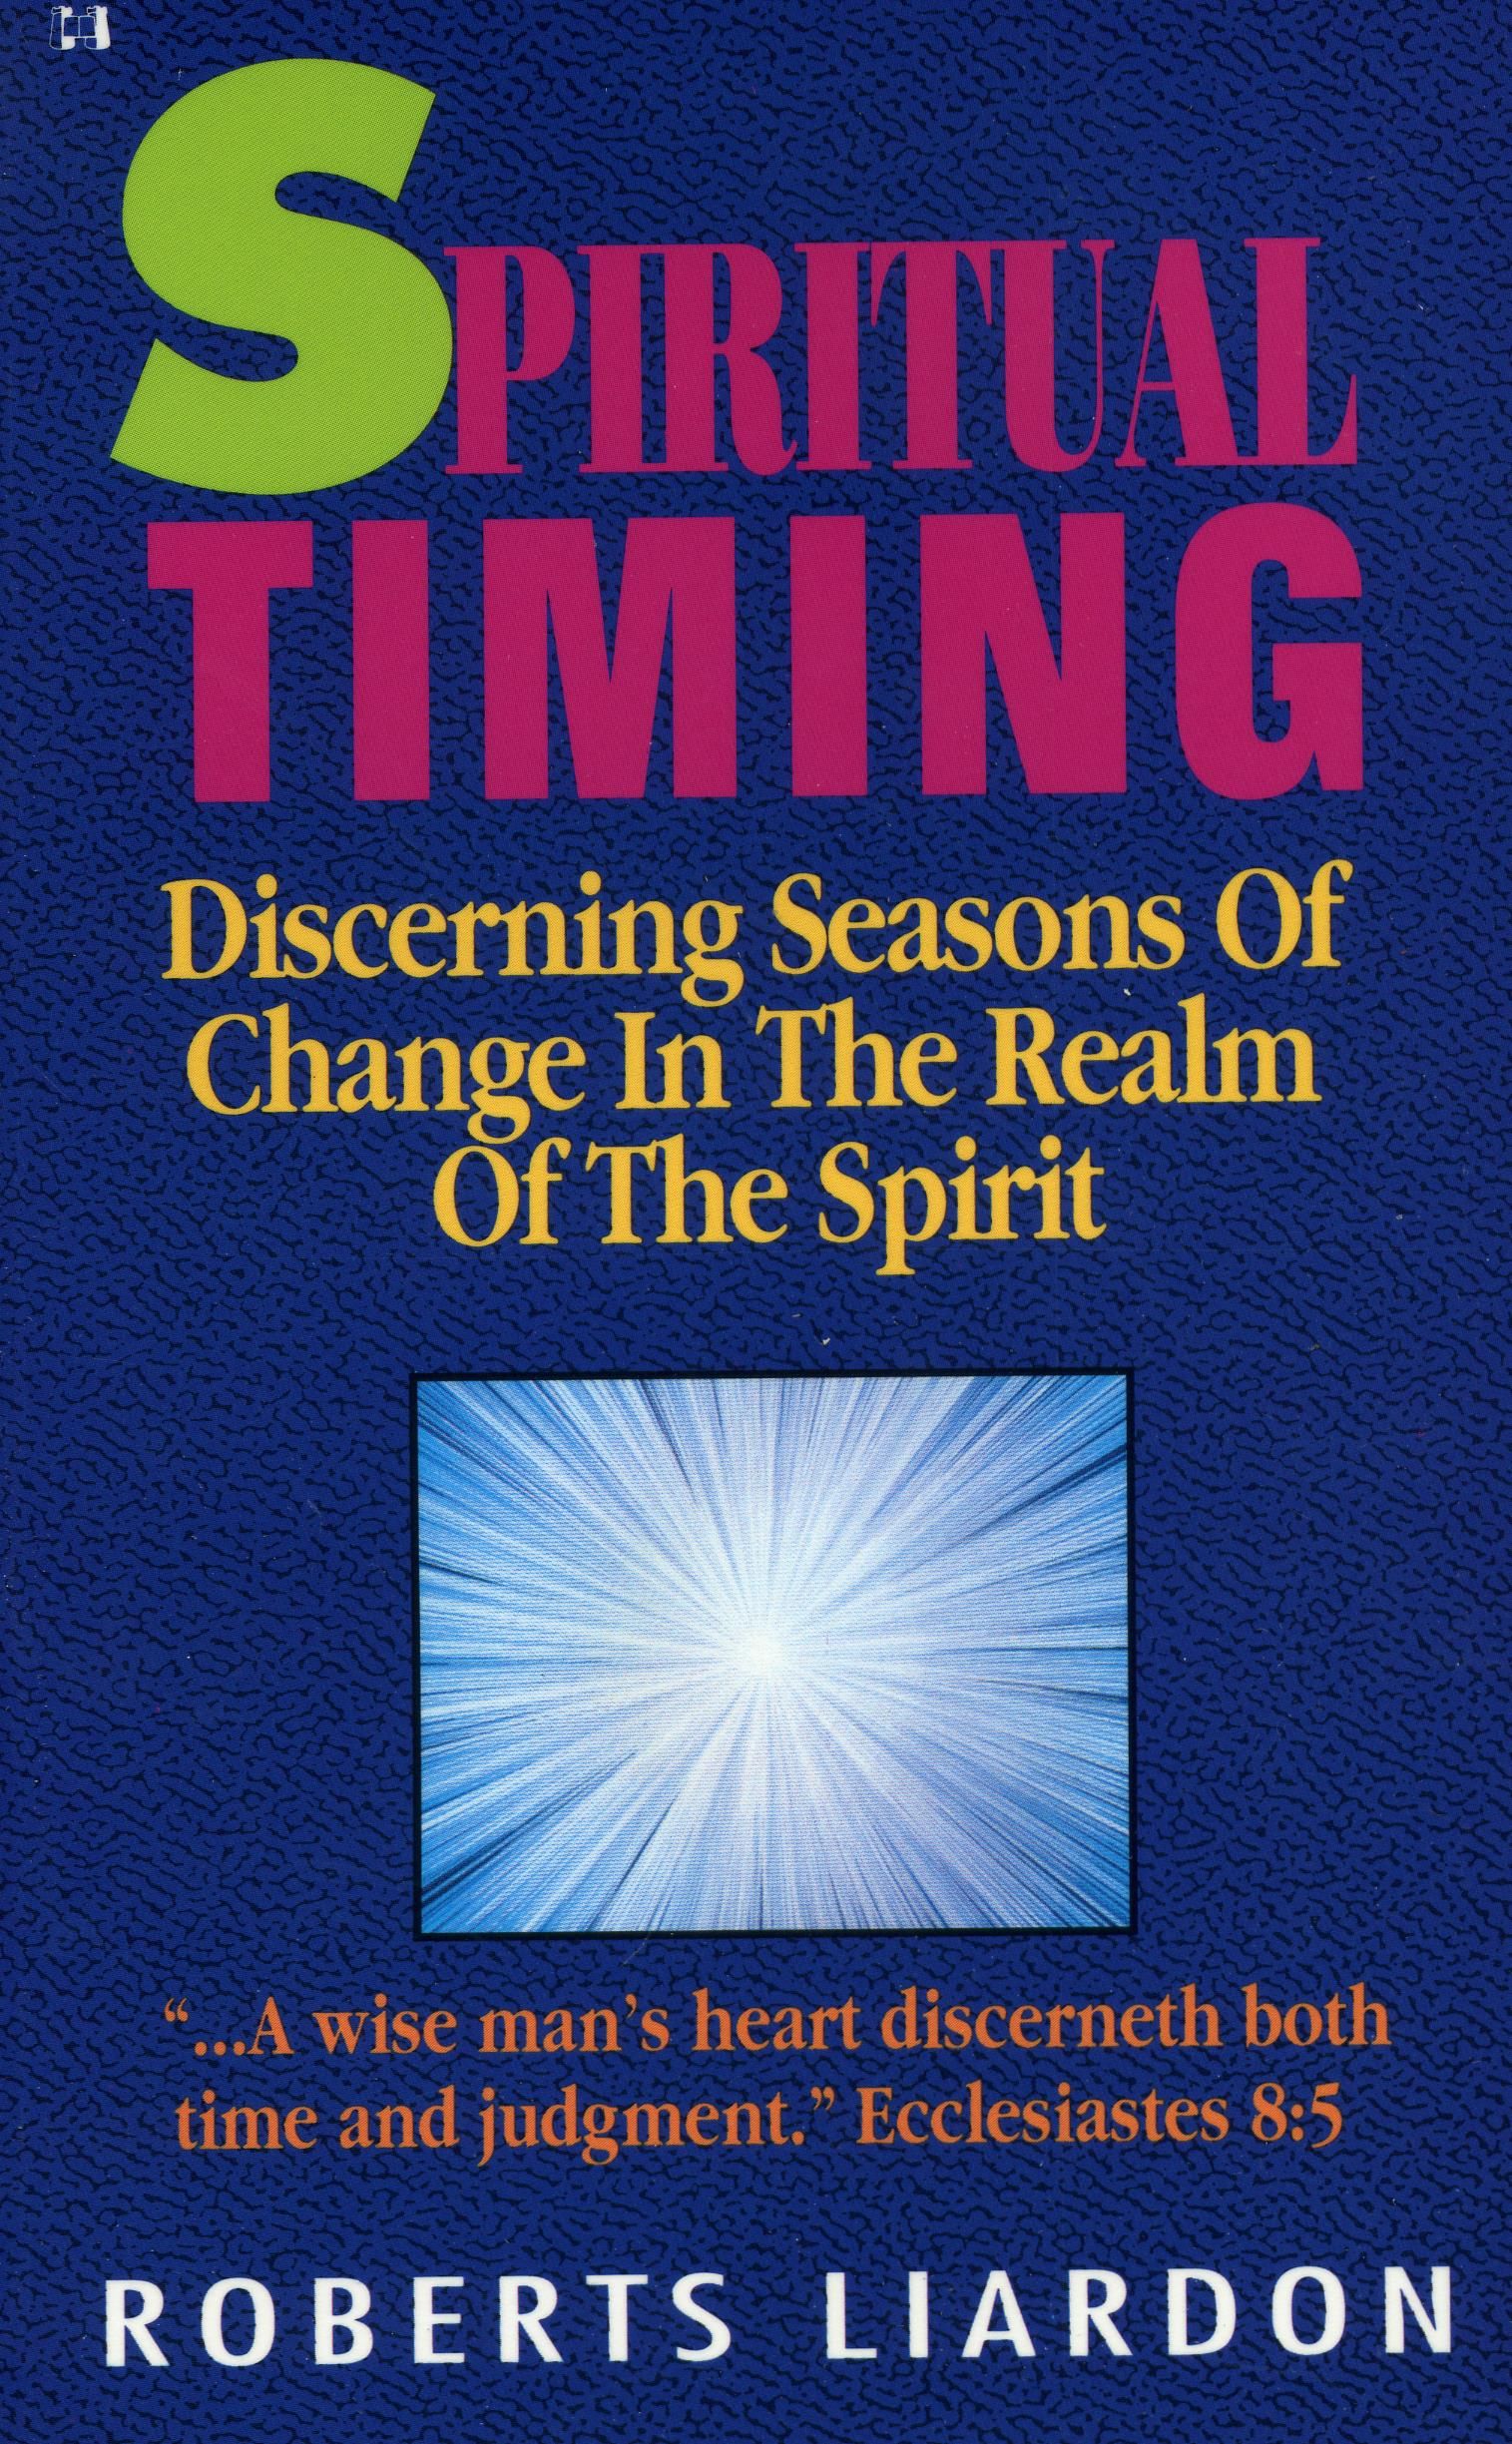 Englische Bücher - Roberts Liardon: Spiritual Timing